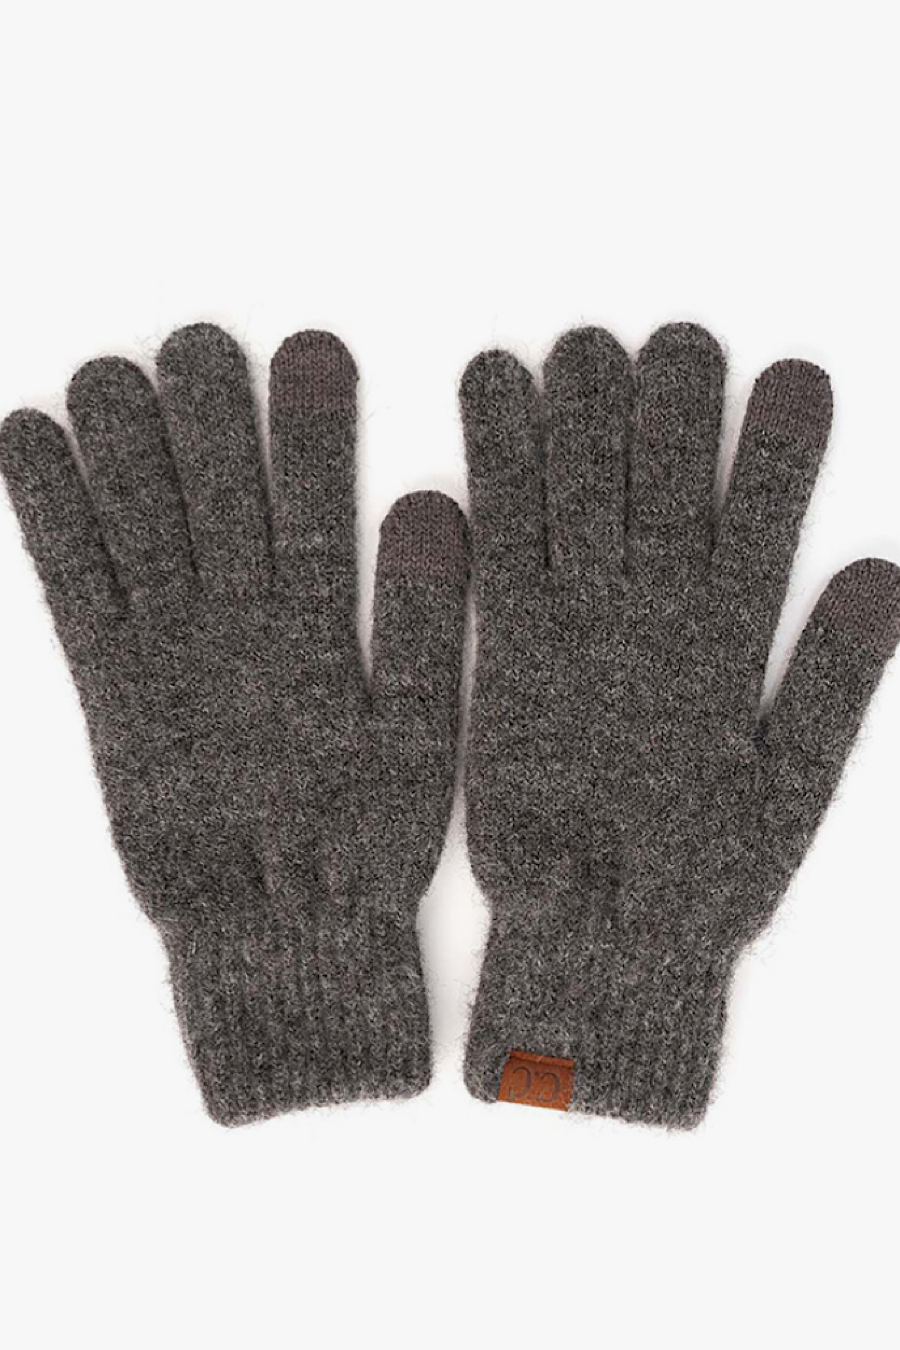 C.C. Heather Knit Gloves in Black or Grey